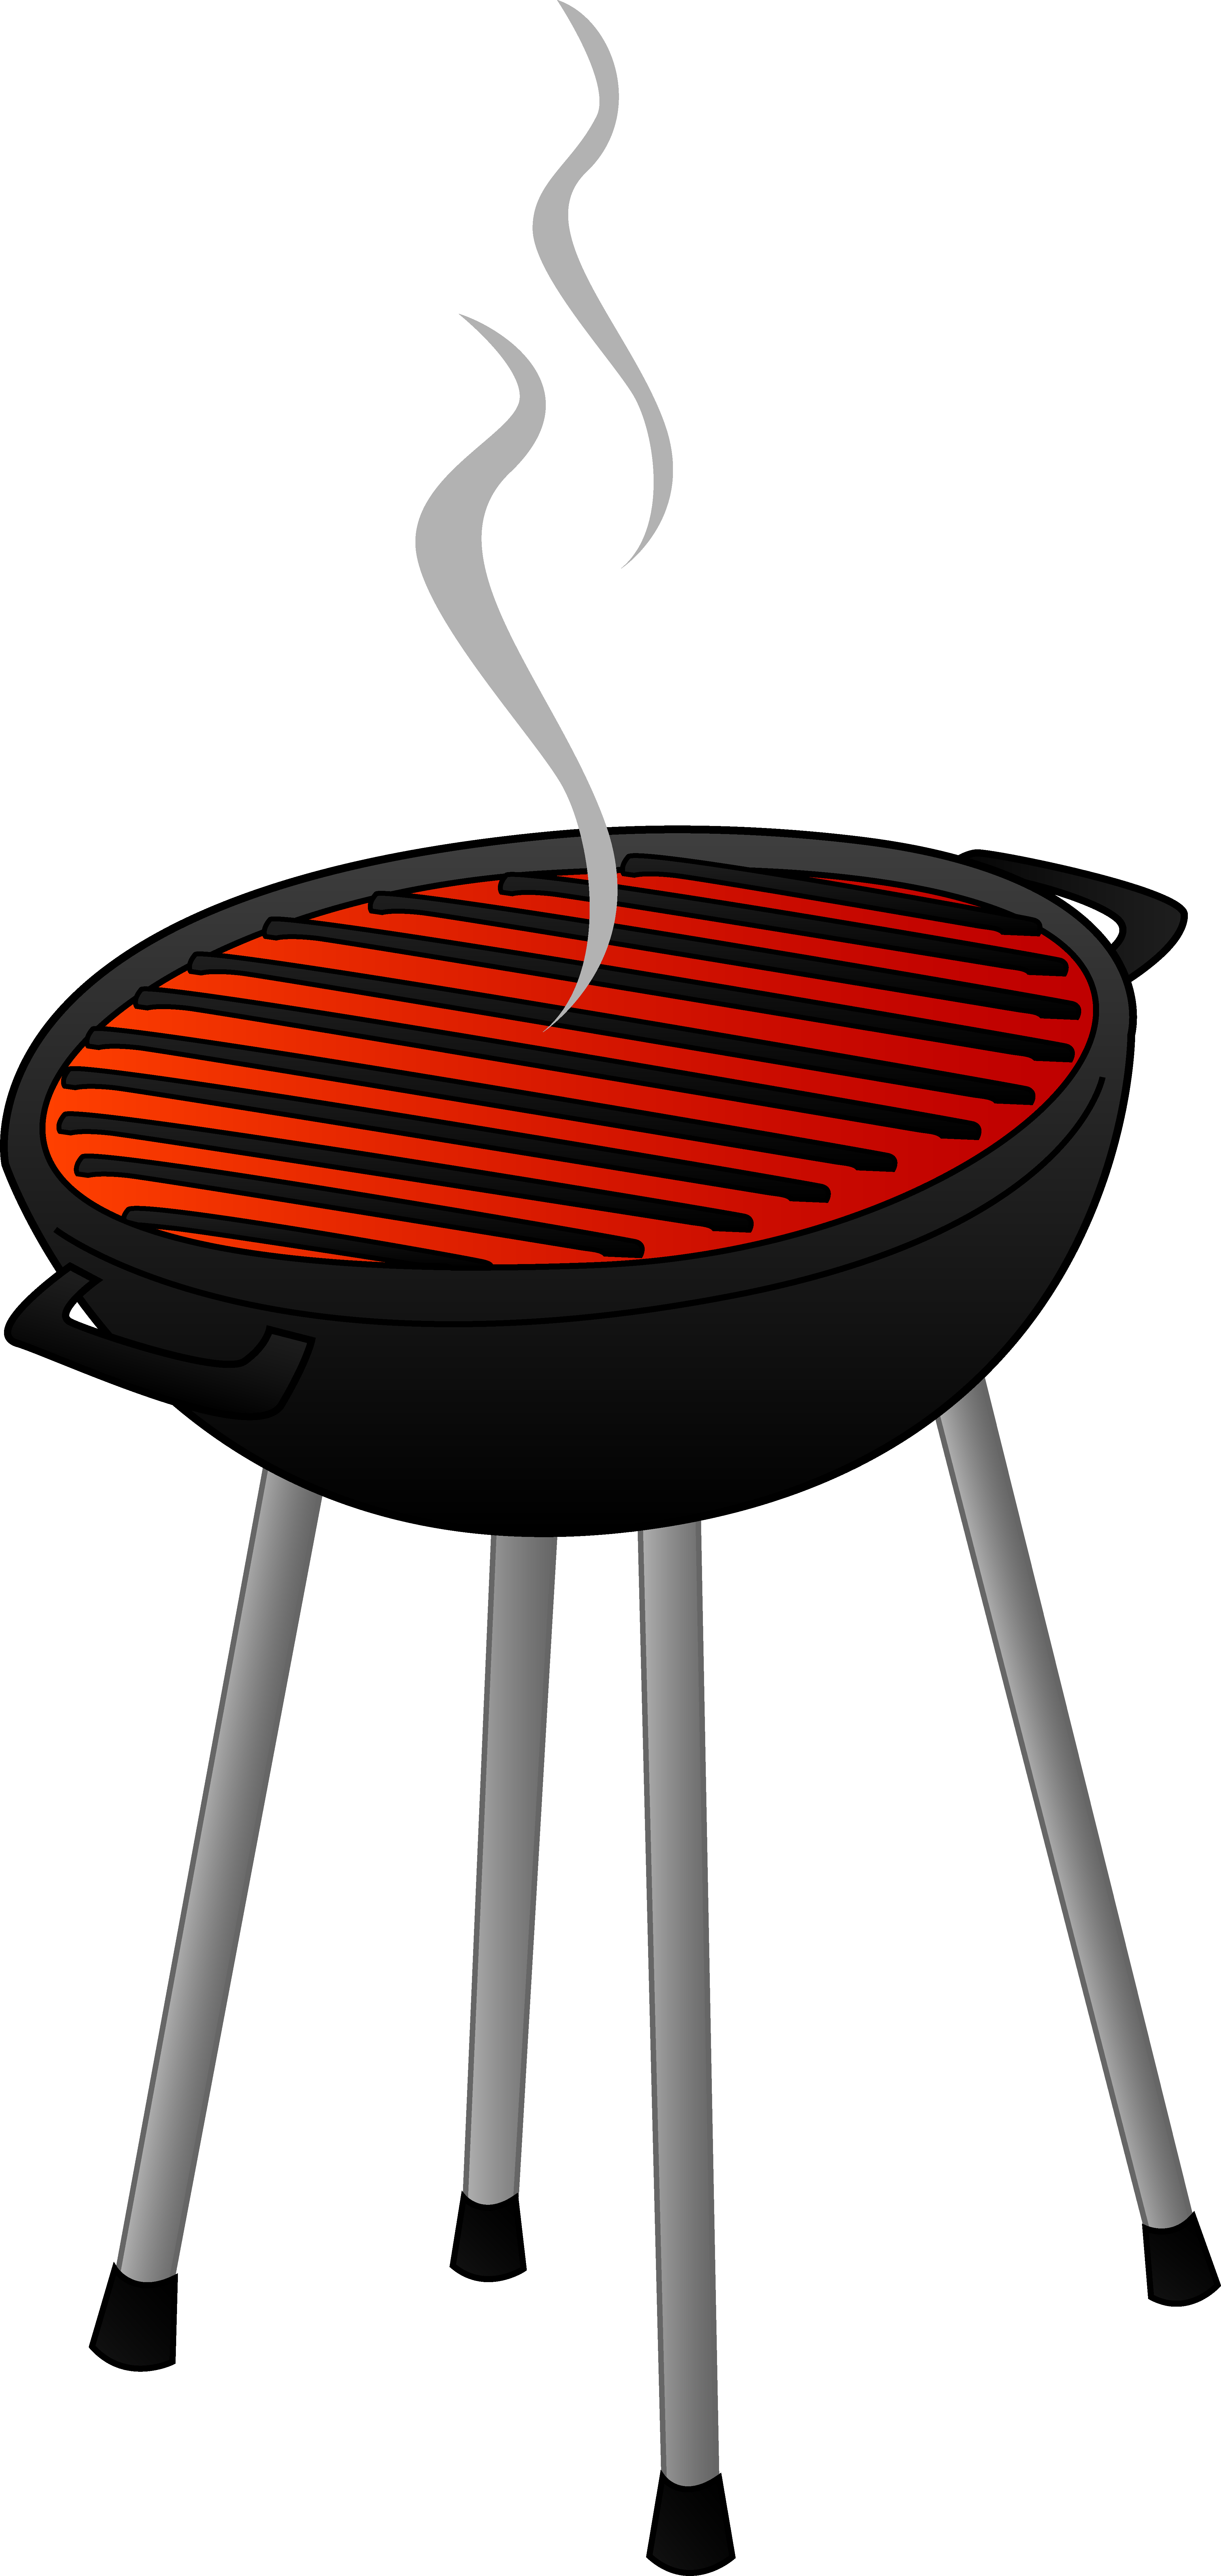 Barbecue grill clipart - Clipground